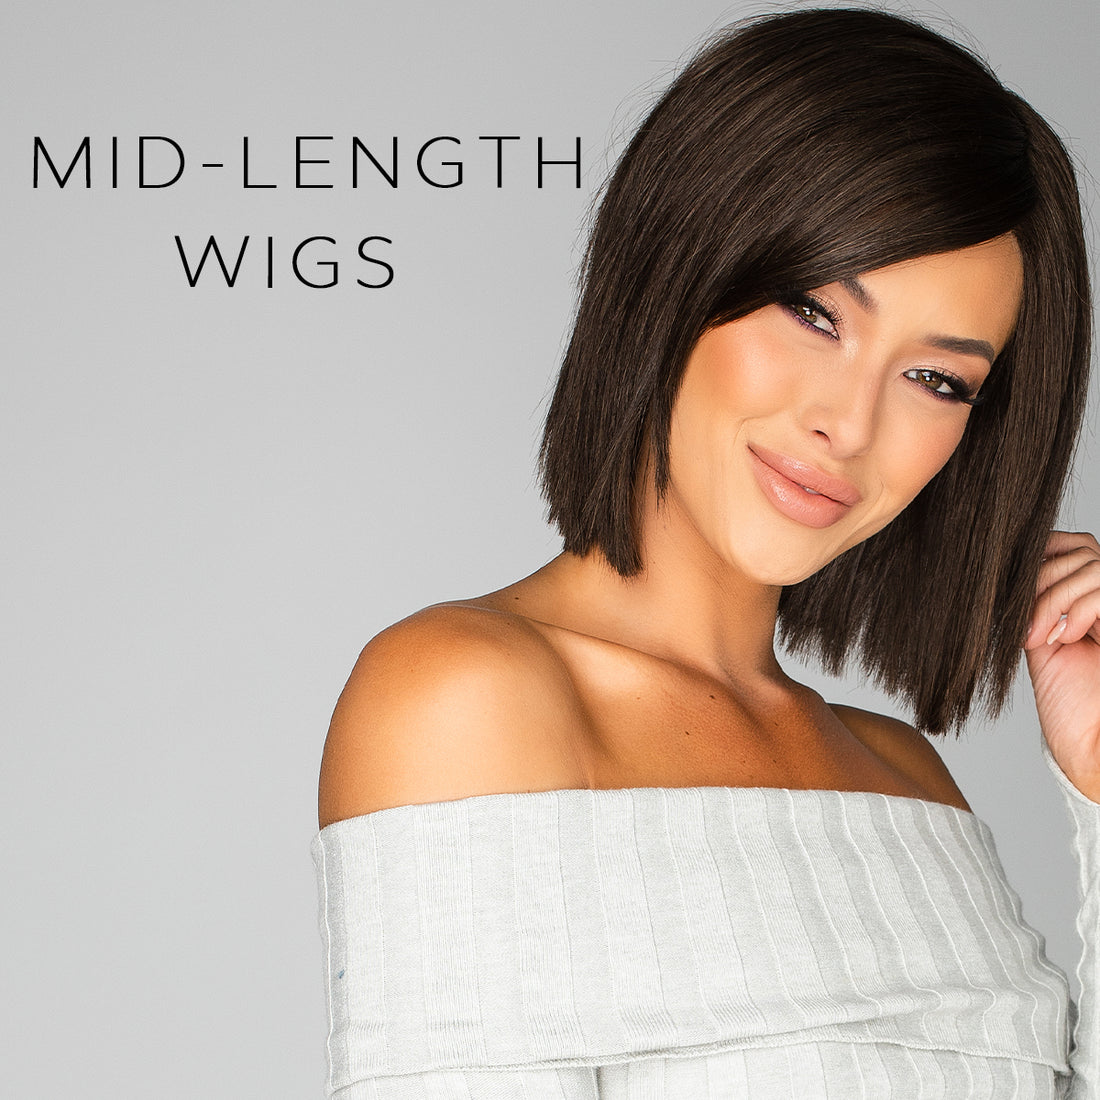 5 Stunning Mid-Length Wigs